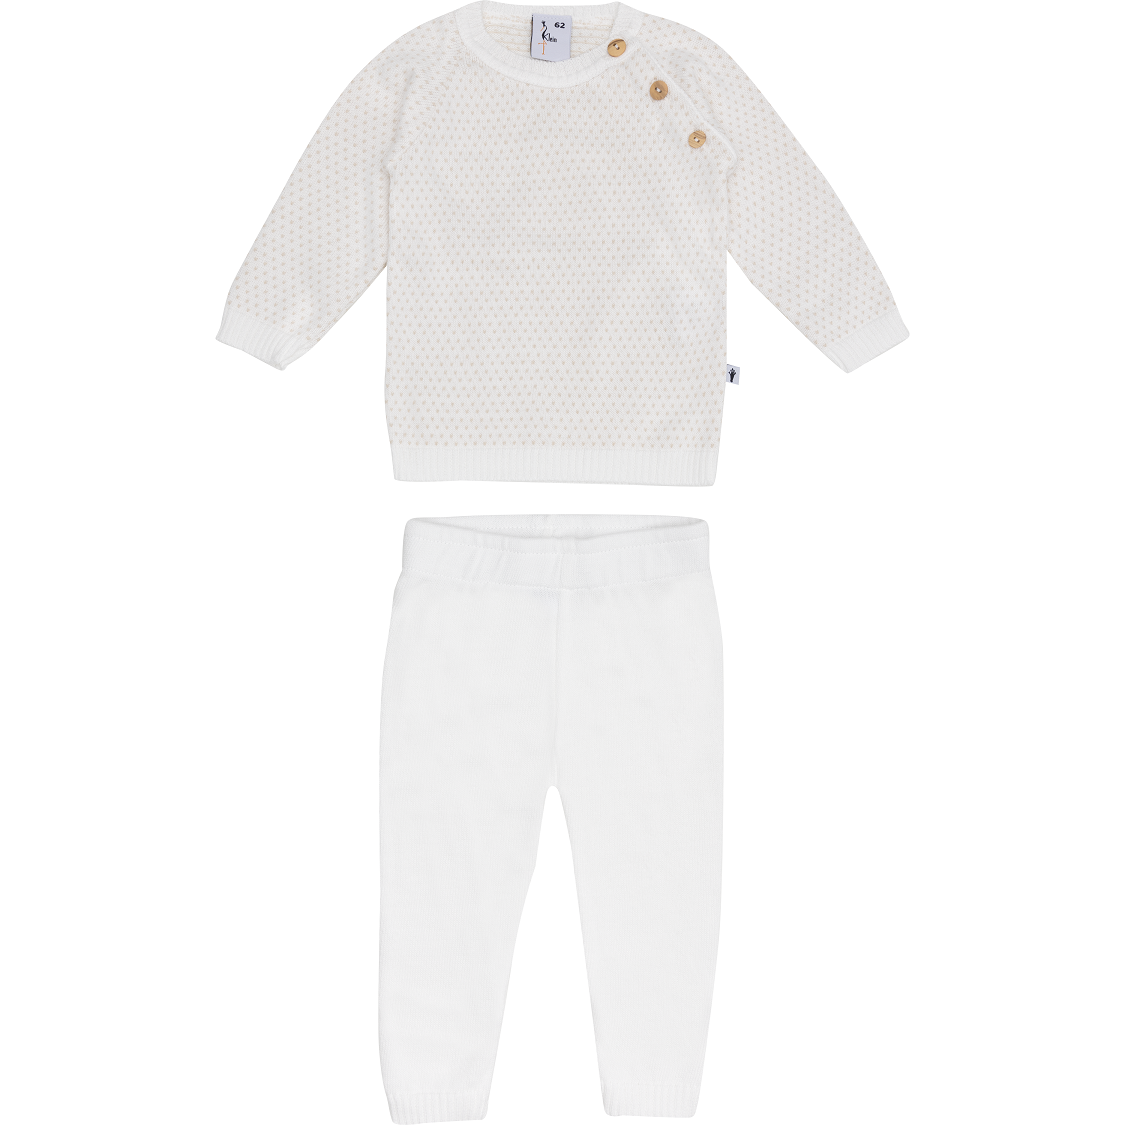 Klein Baby Organic Knitted Set - White